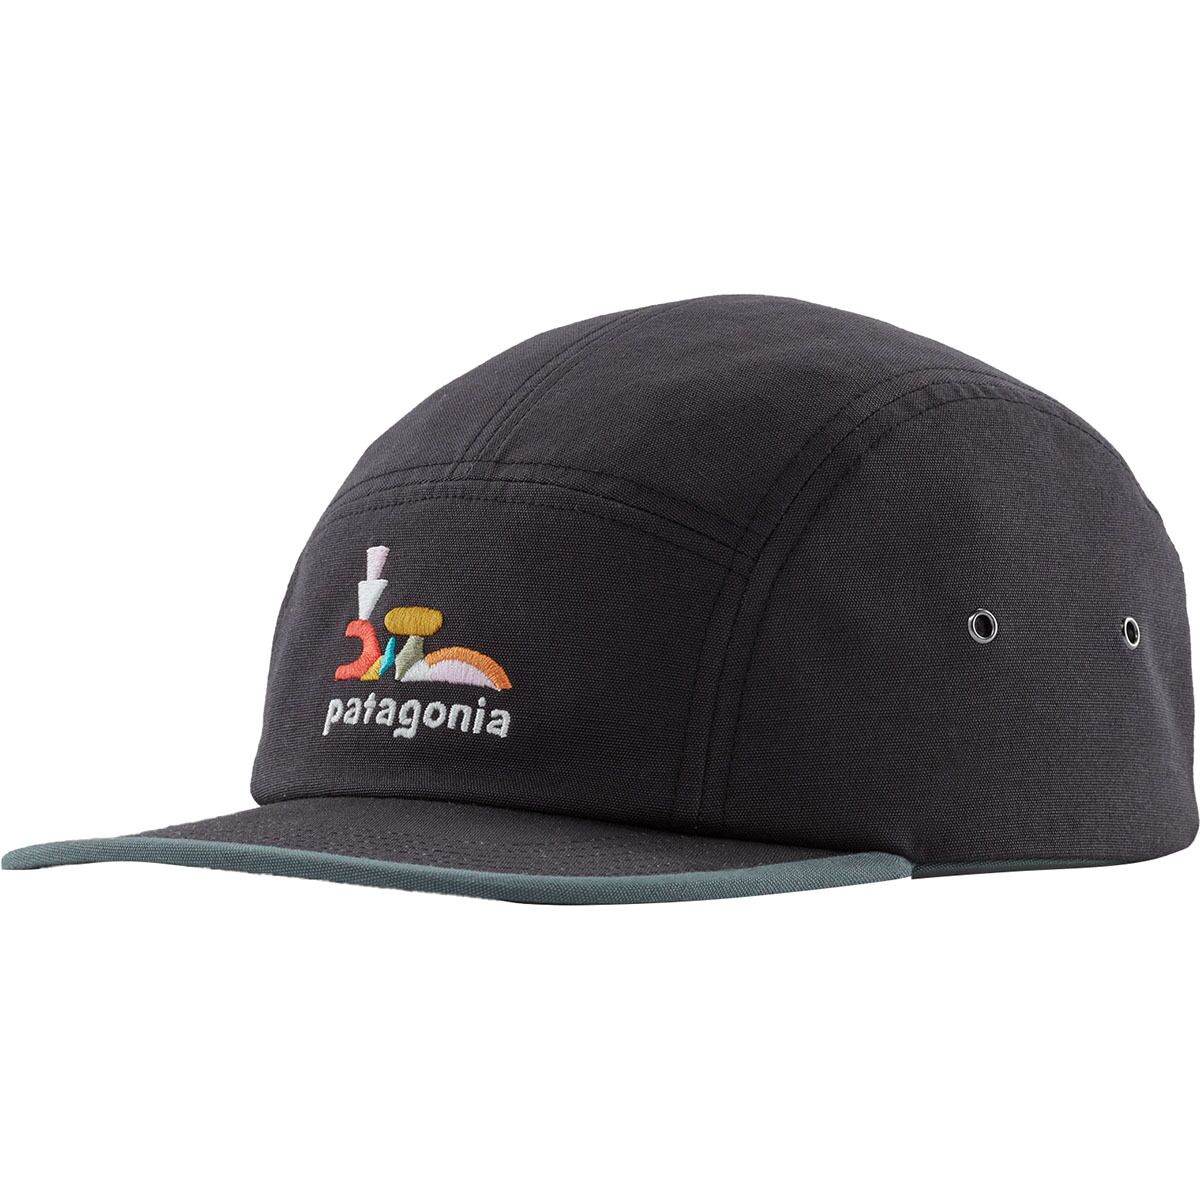 Шляпа maclure с графическим рисунком Patagonia, черный